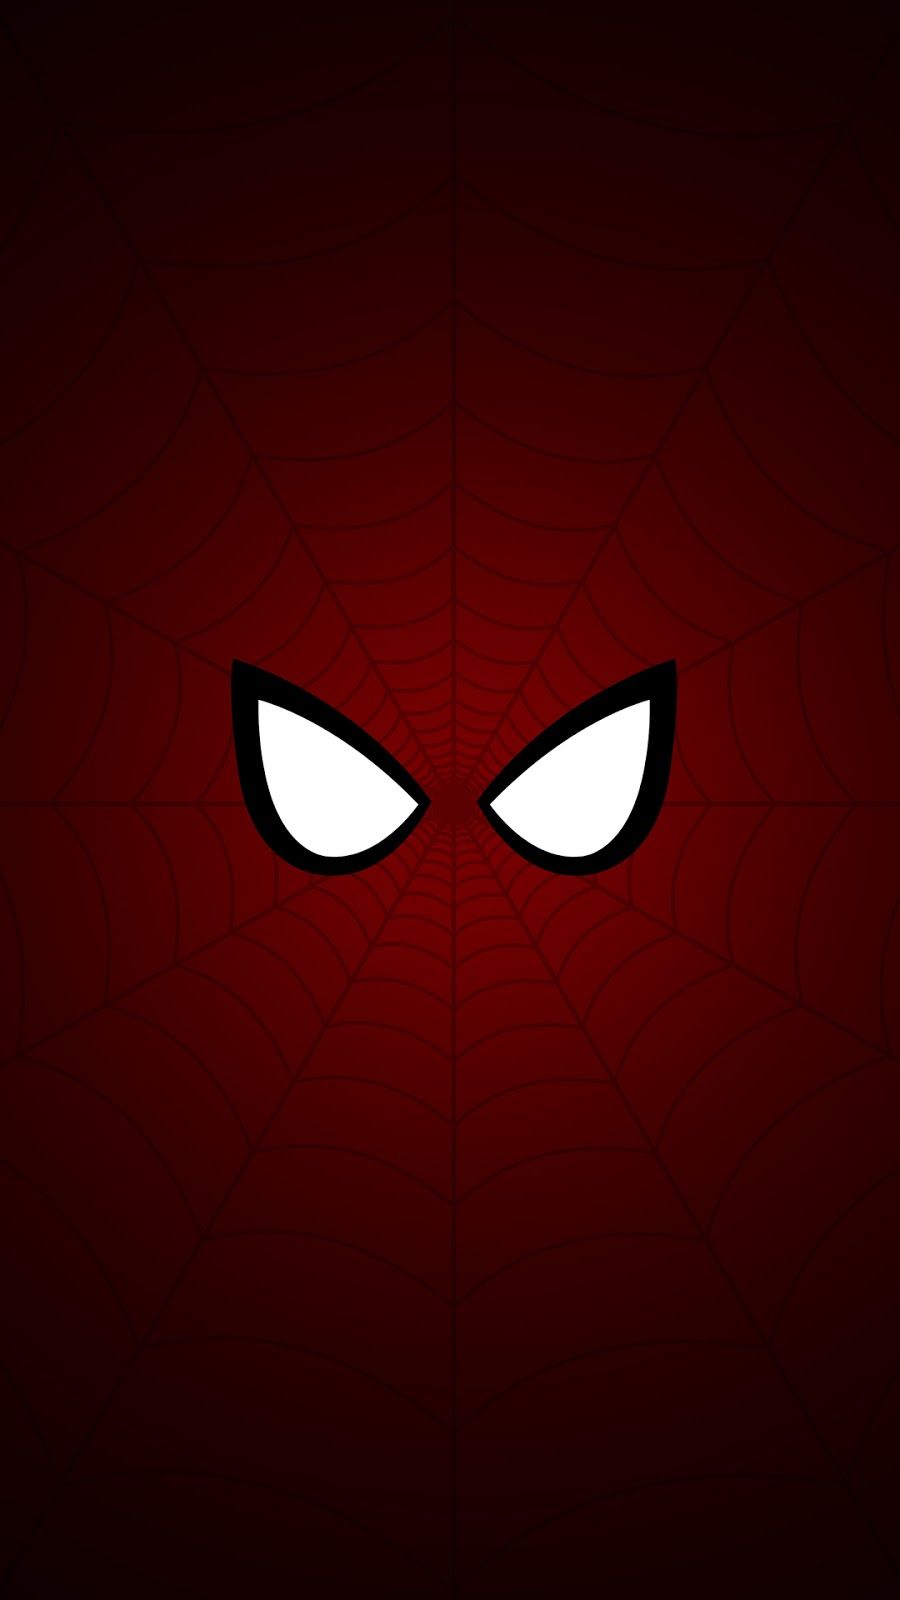 Fondo de pantalla gratuito de Teléfono: Spiderman Wallpapers iphone 6S Plus